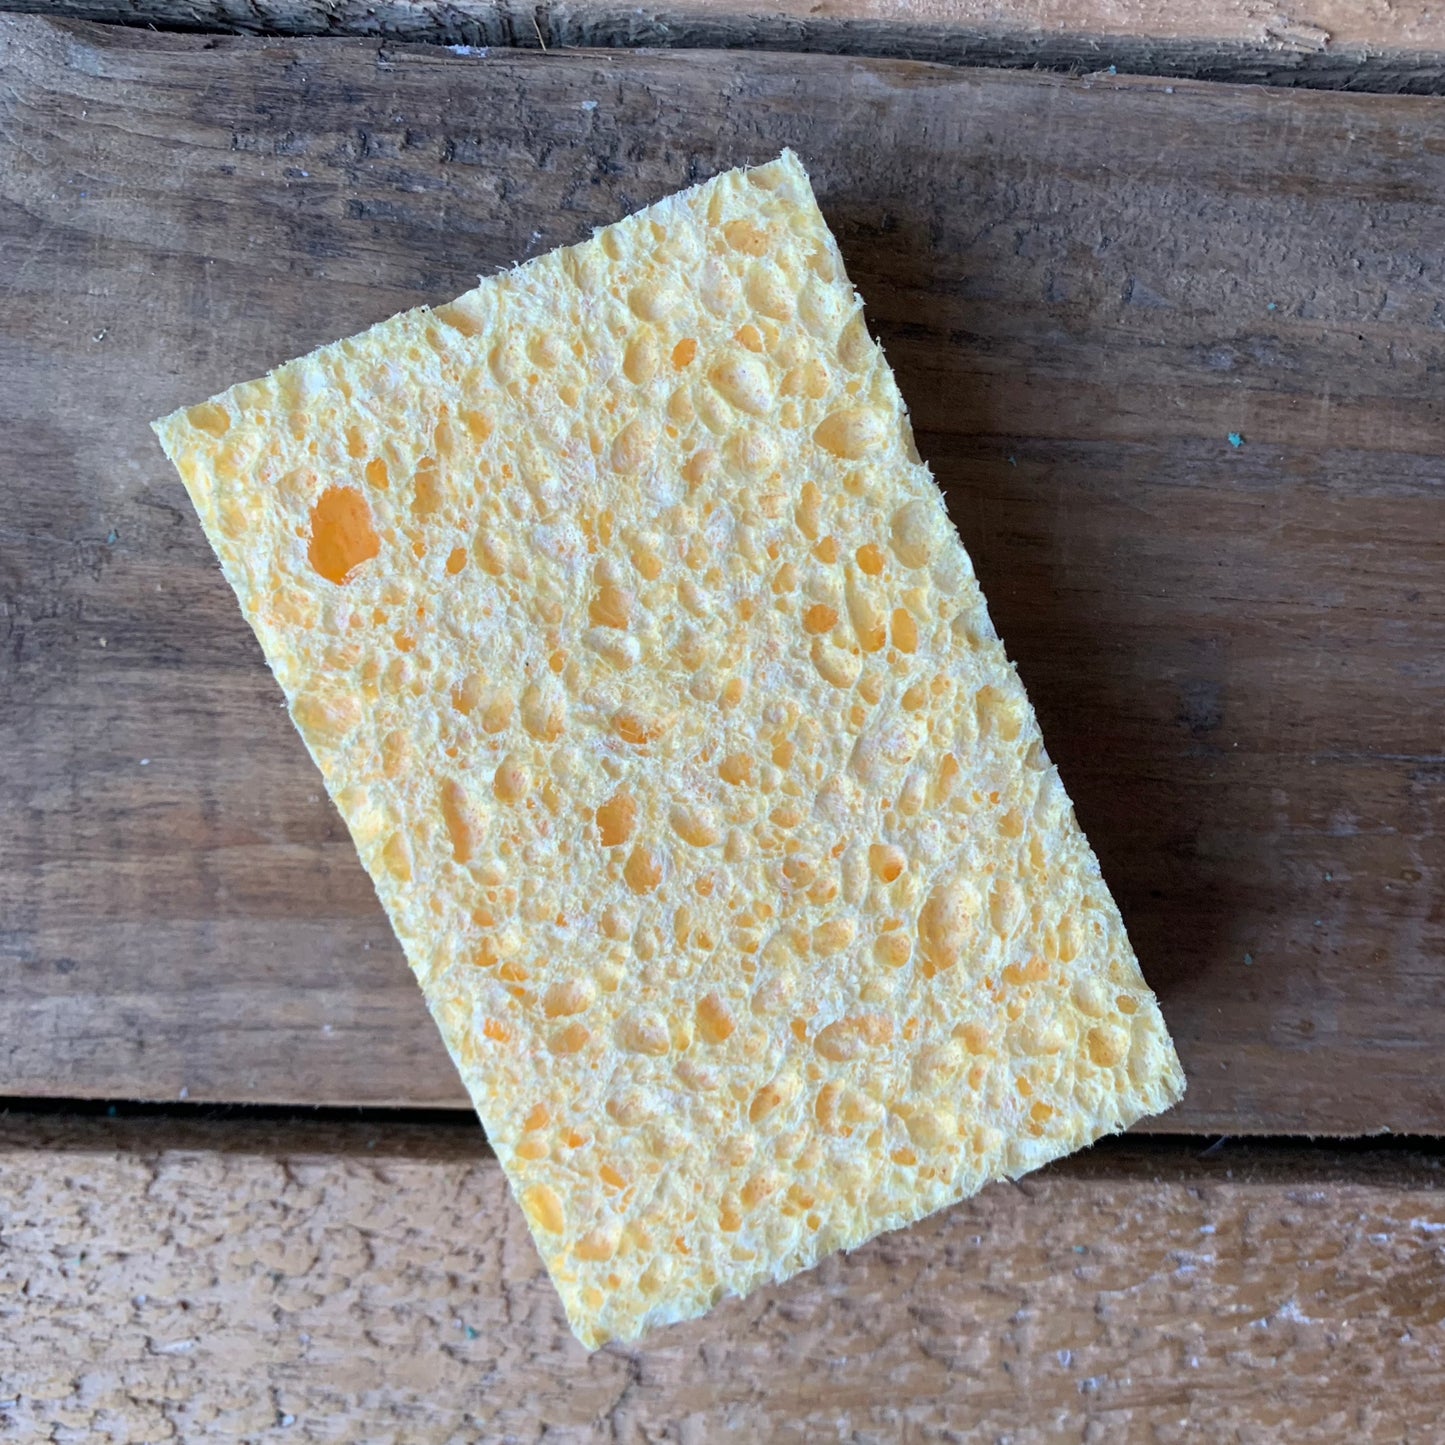 Ecoliving Compostable Sponges (2 pack)